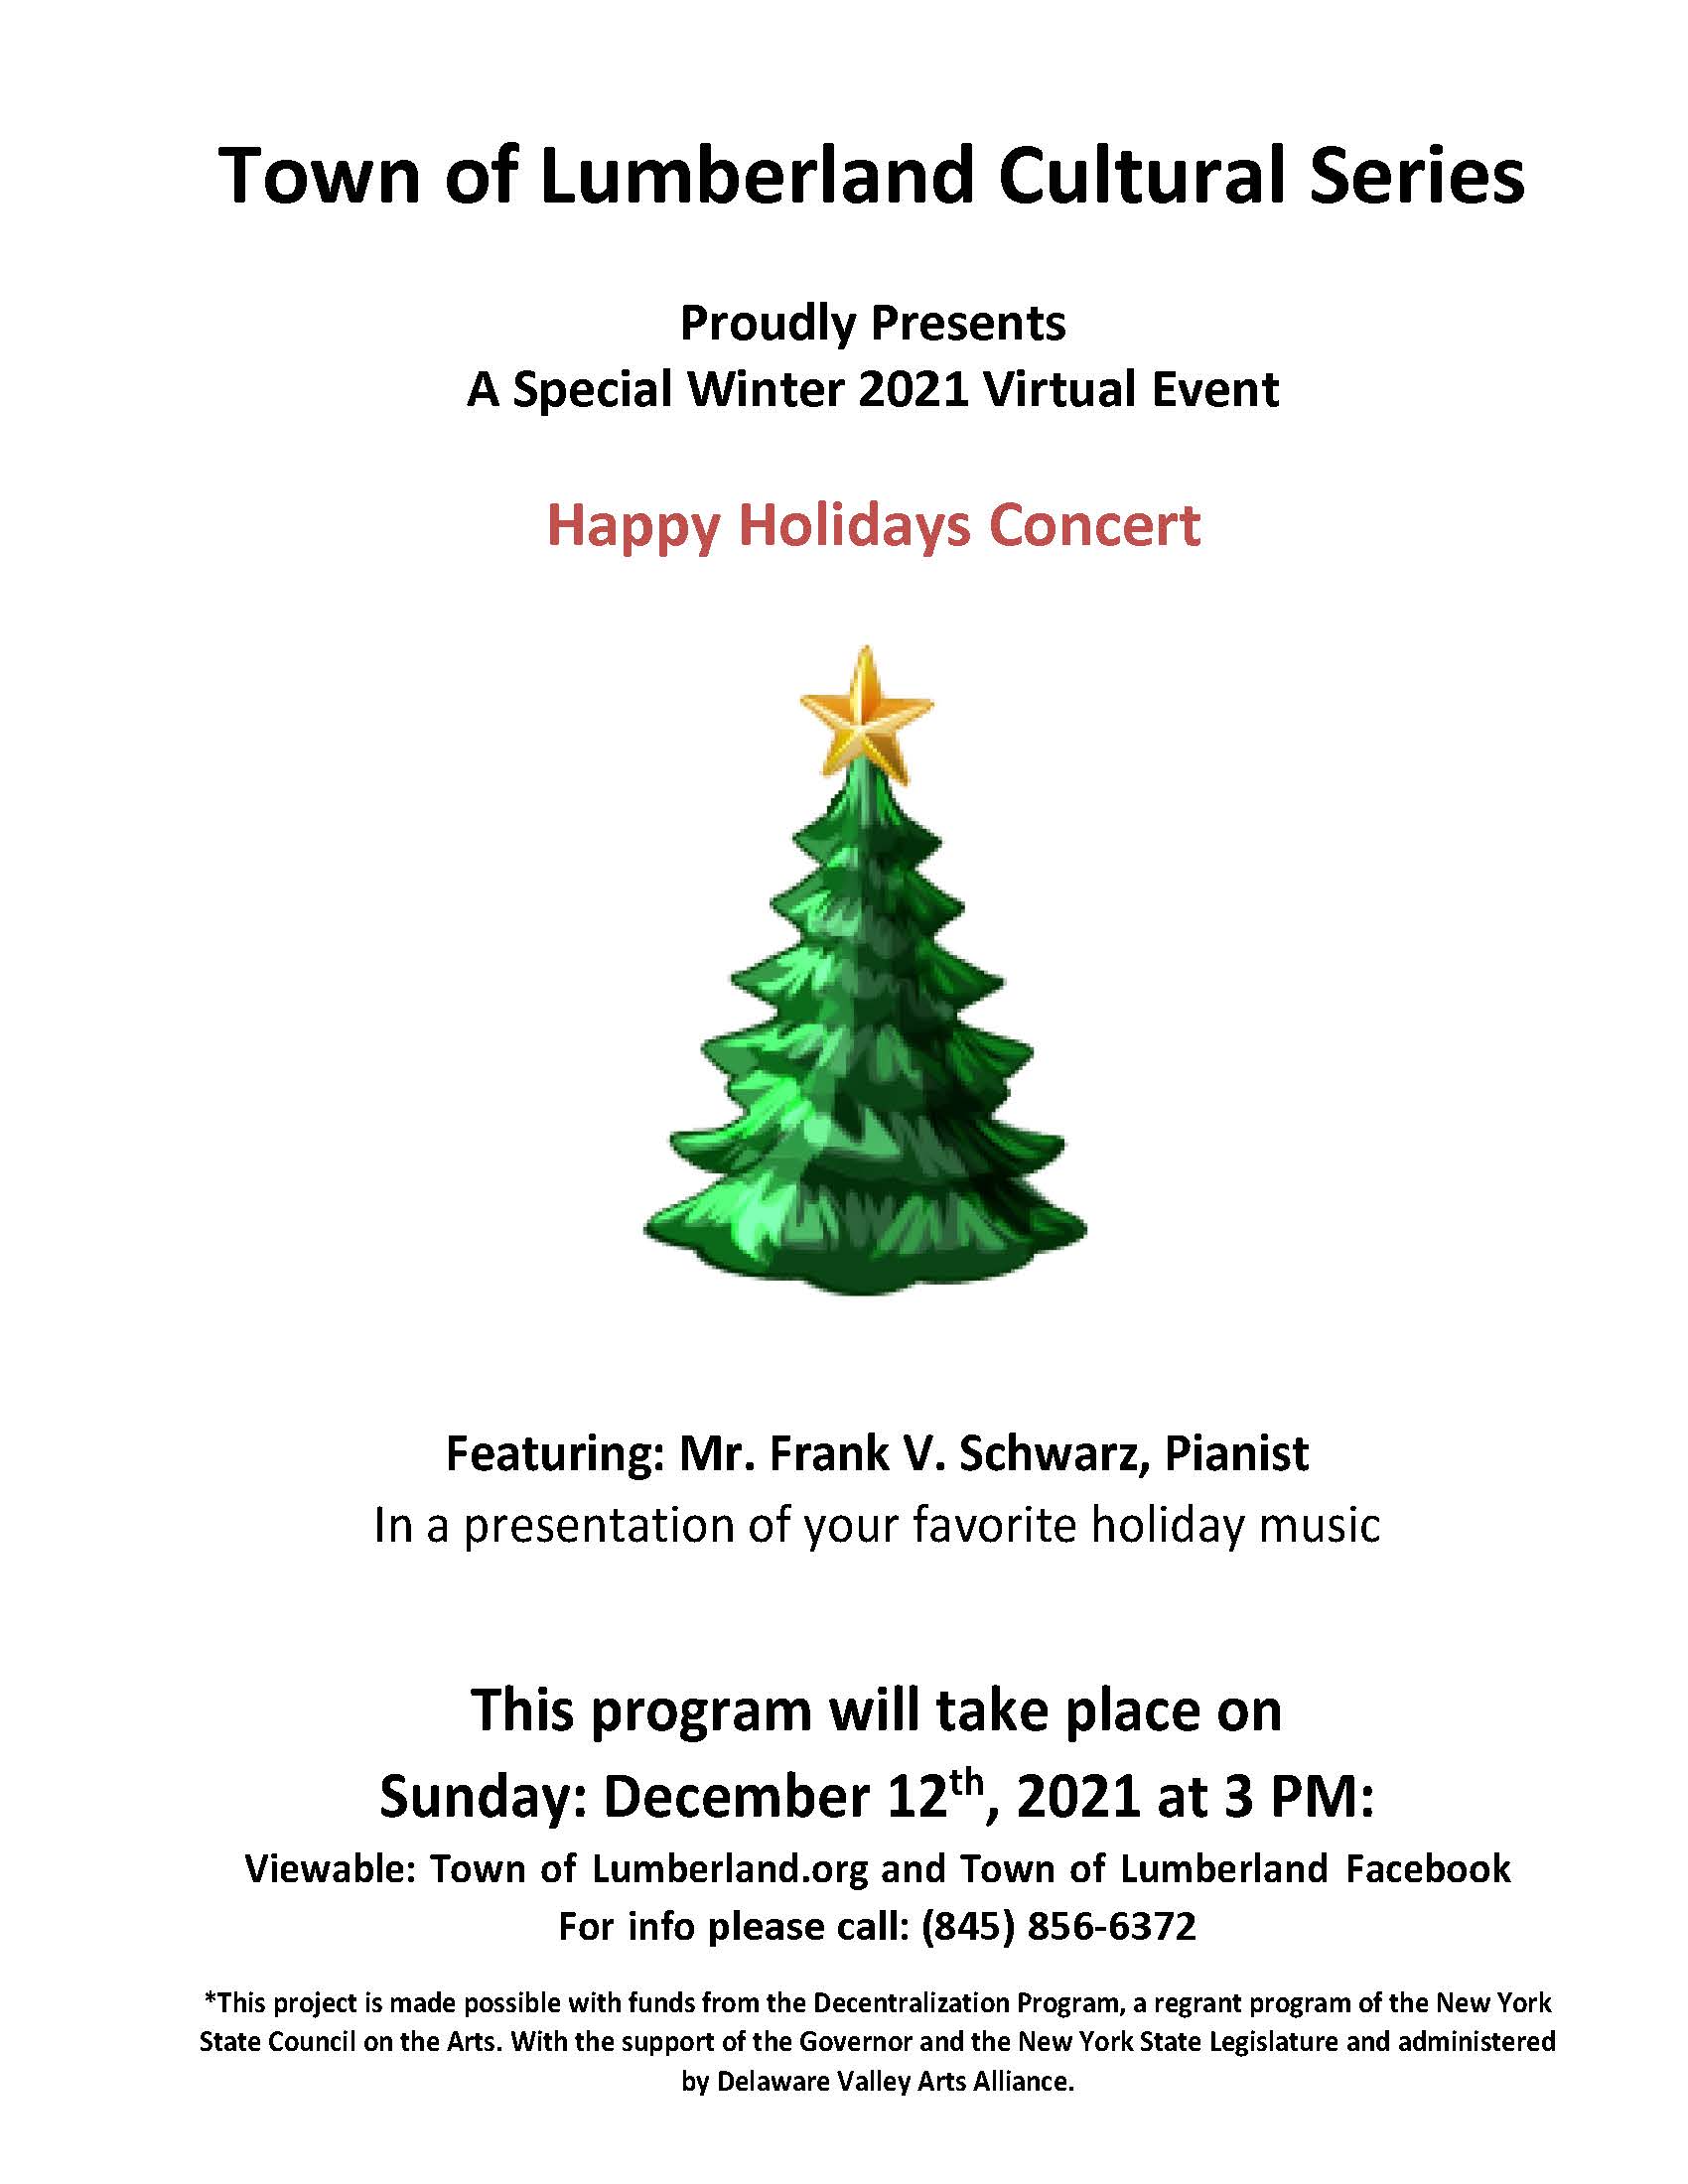 Holiday Concert Flyer version 1